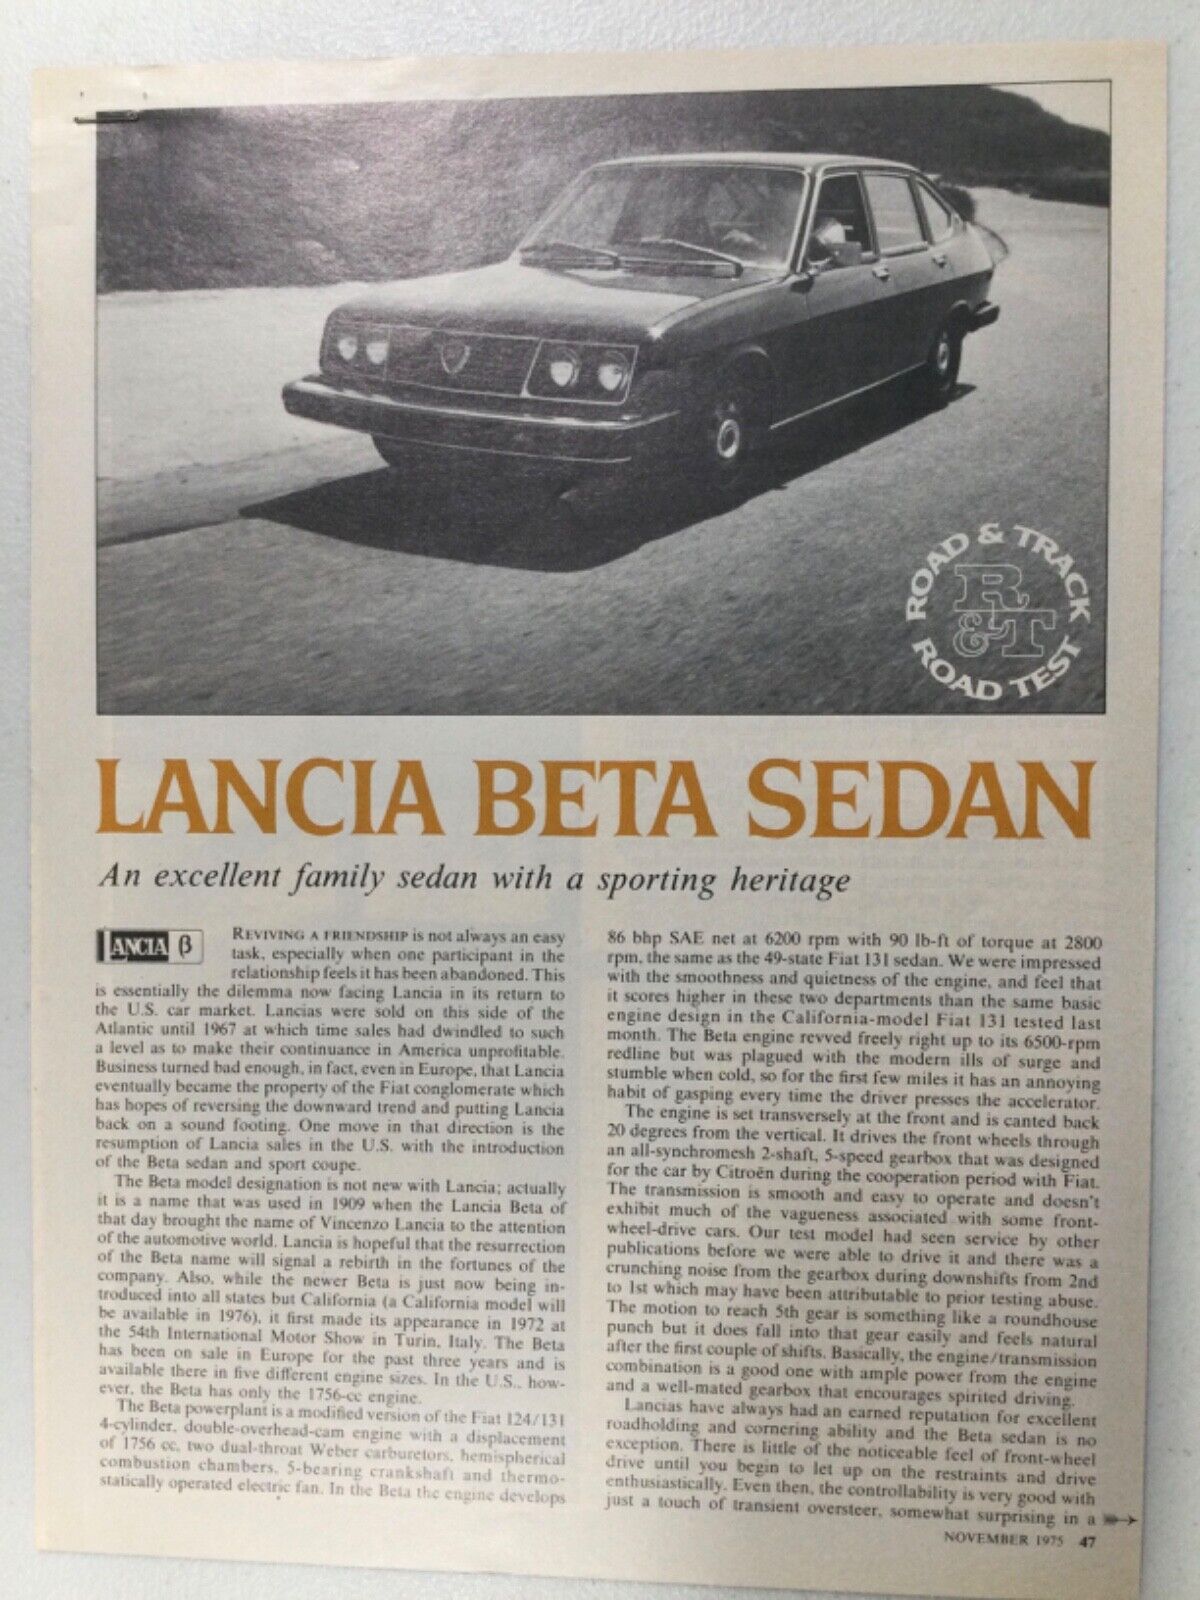 LLLArt72 Vintage Article Road Test 1976 Lancia Beta Sedan Nov 1975 4 page